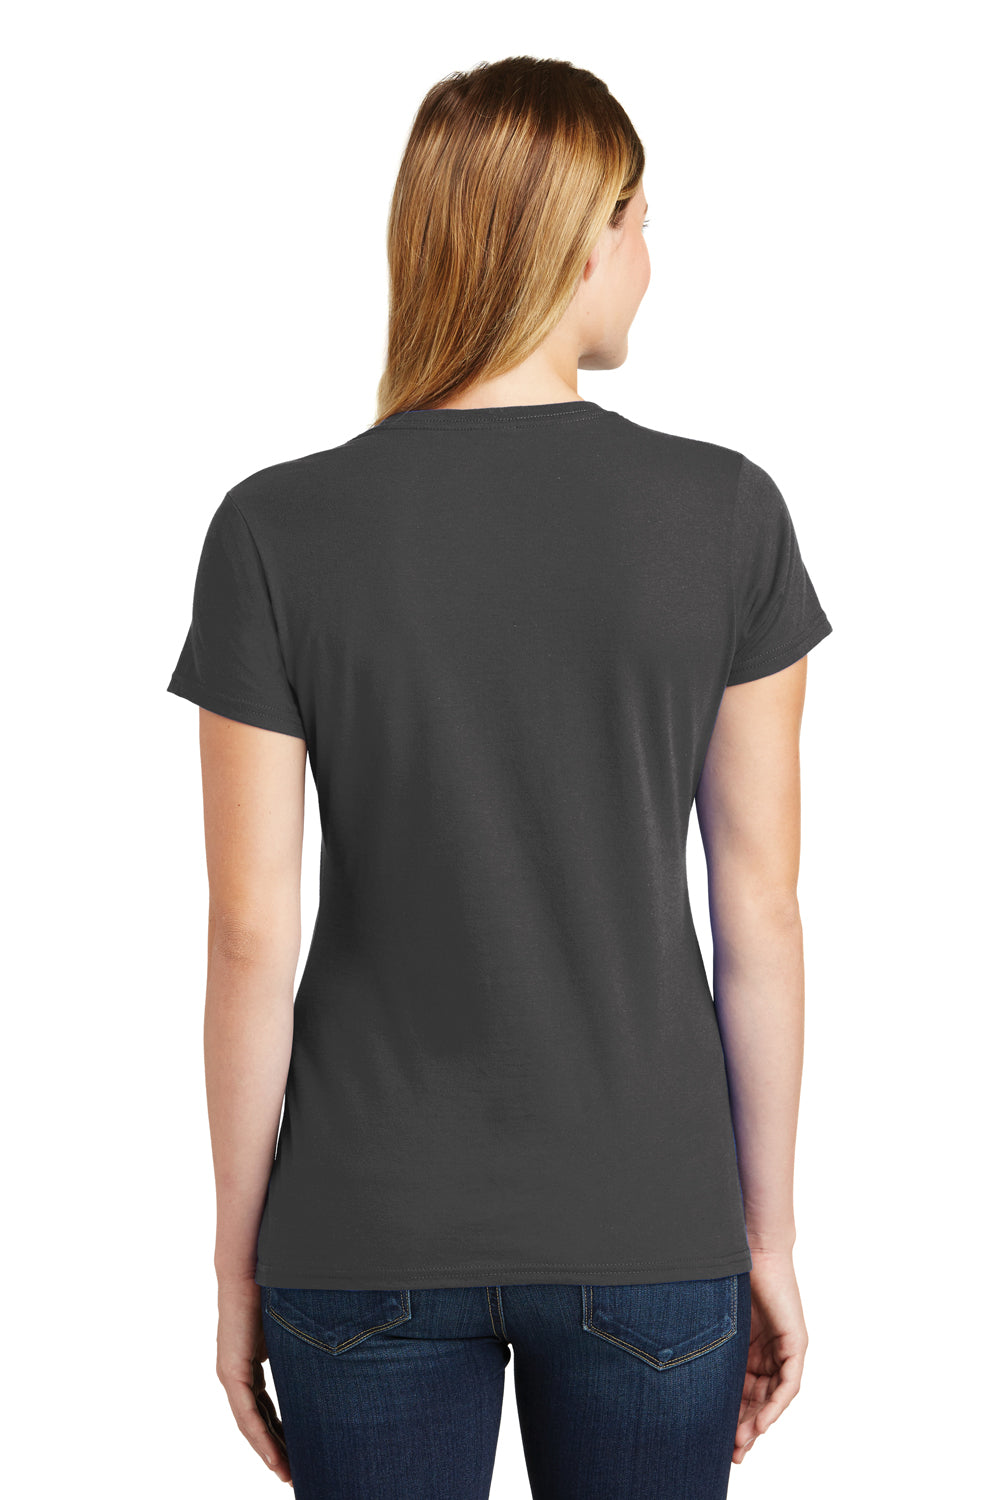 Port & Company LPC450 Womens Fan Favorite Short Sleeve Crewneck T-Shirt Charcoal Grey Back